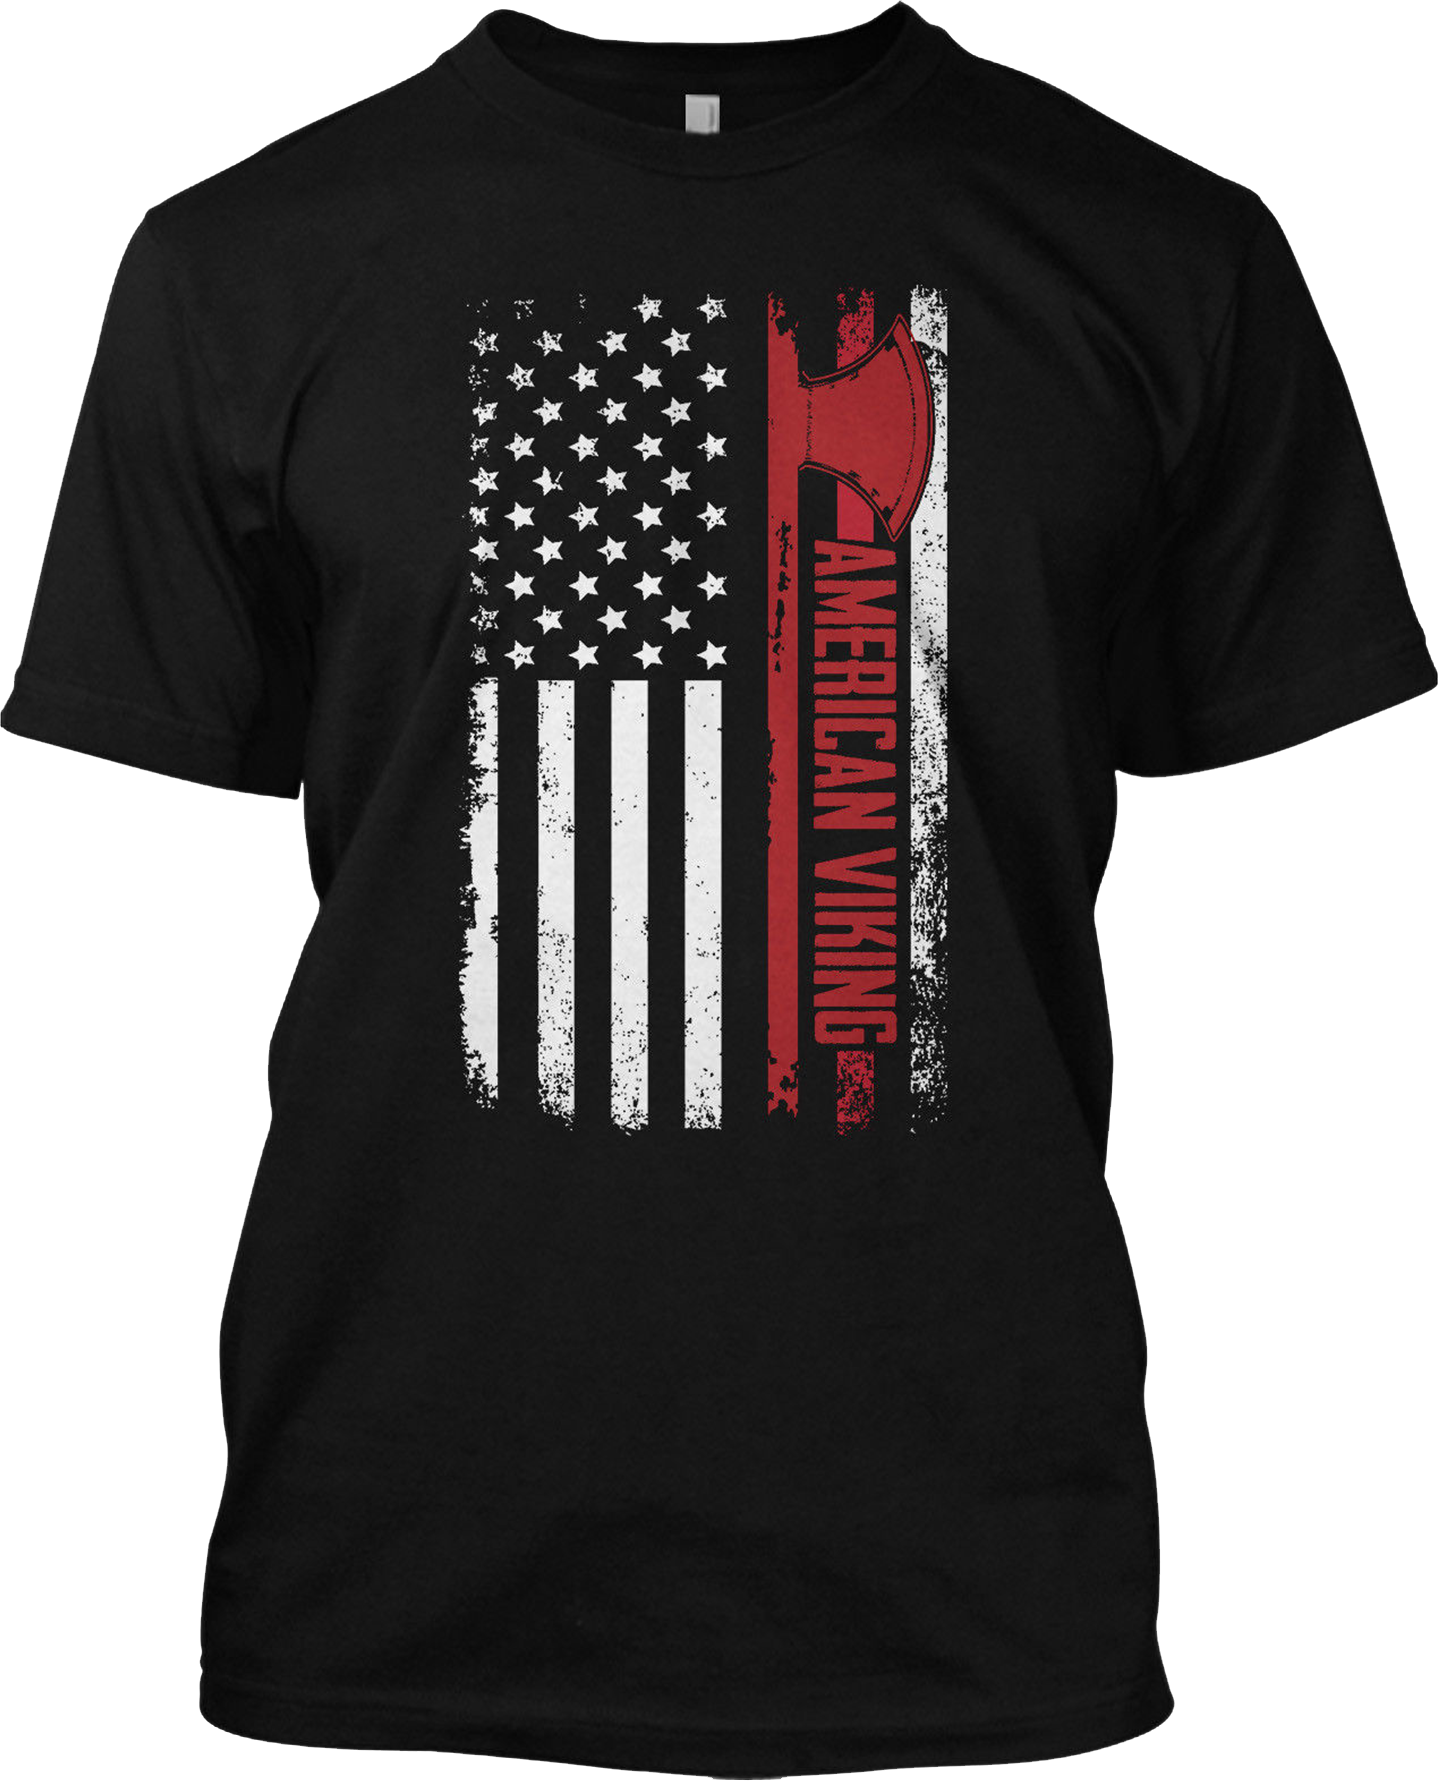 American Viking Patriotic Axe T Shirt Graphic Victory Tee